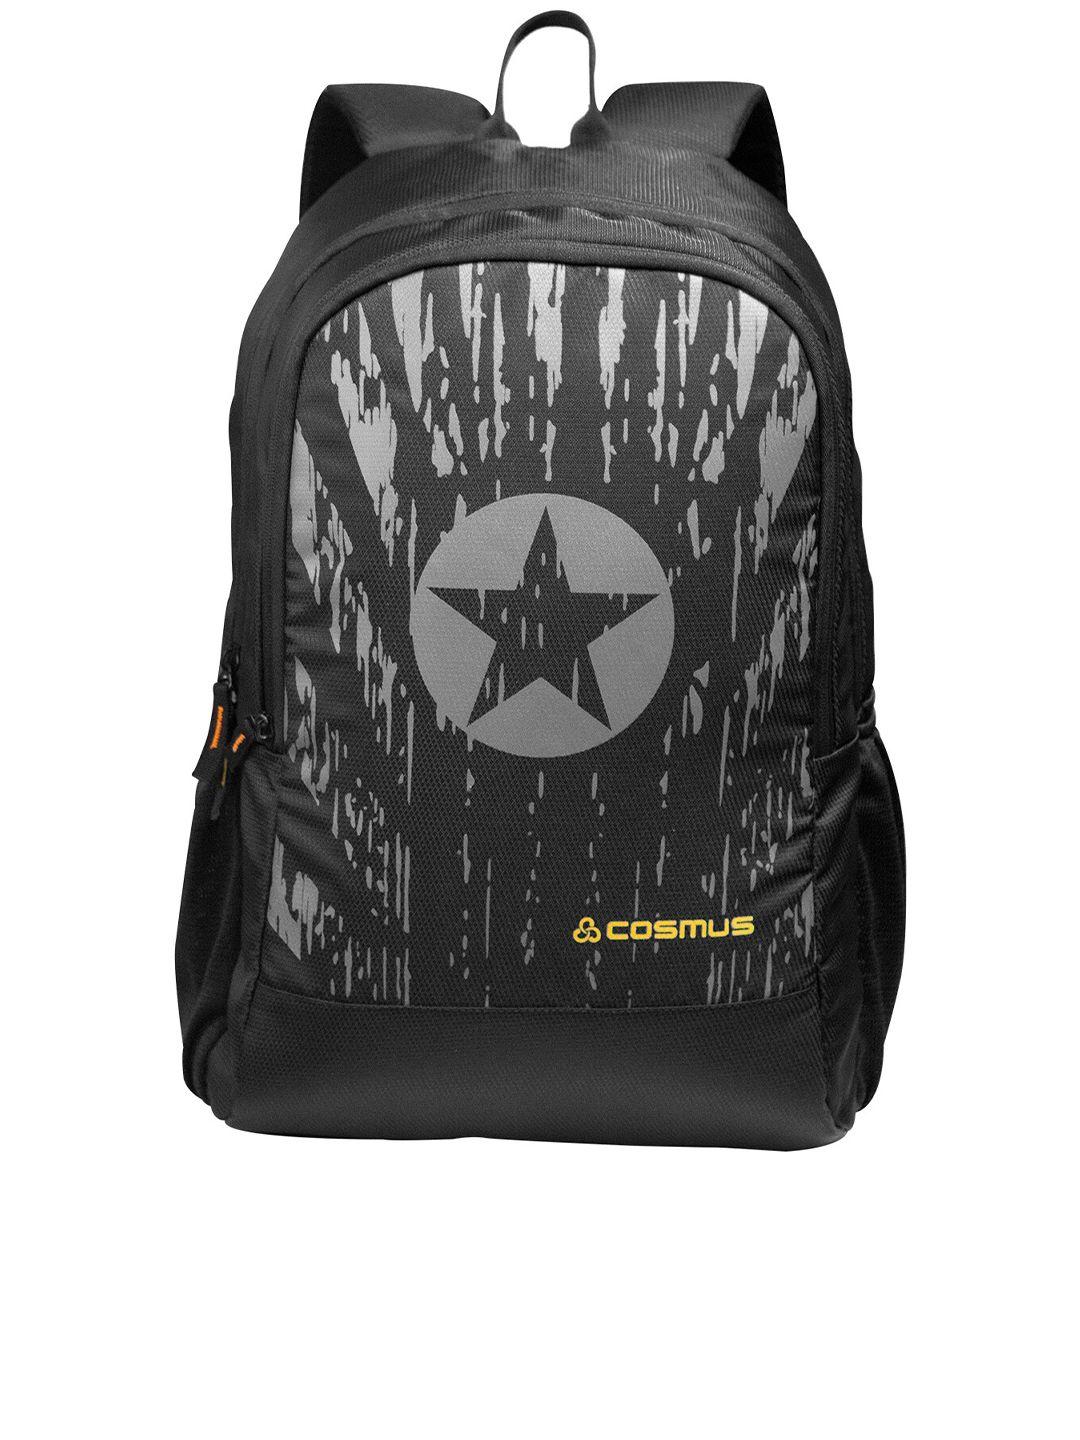 cosmus unisex black & grey college backpack